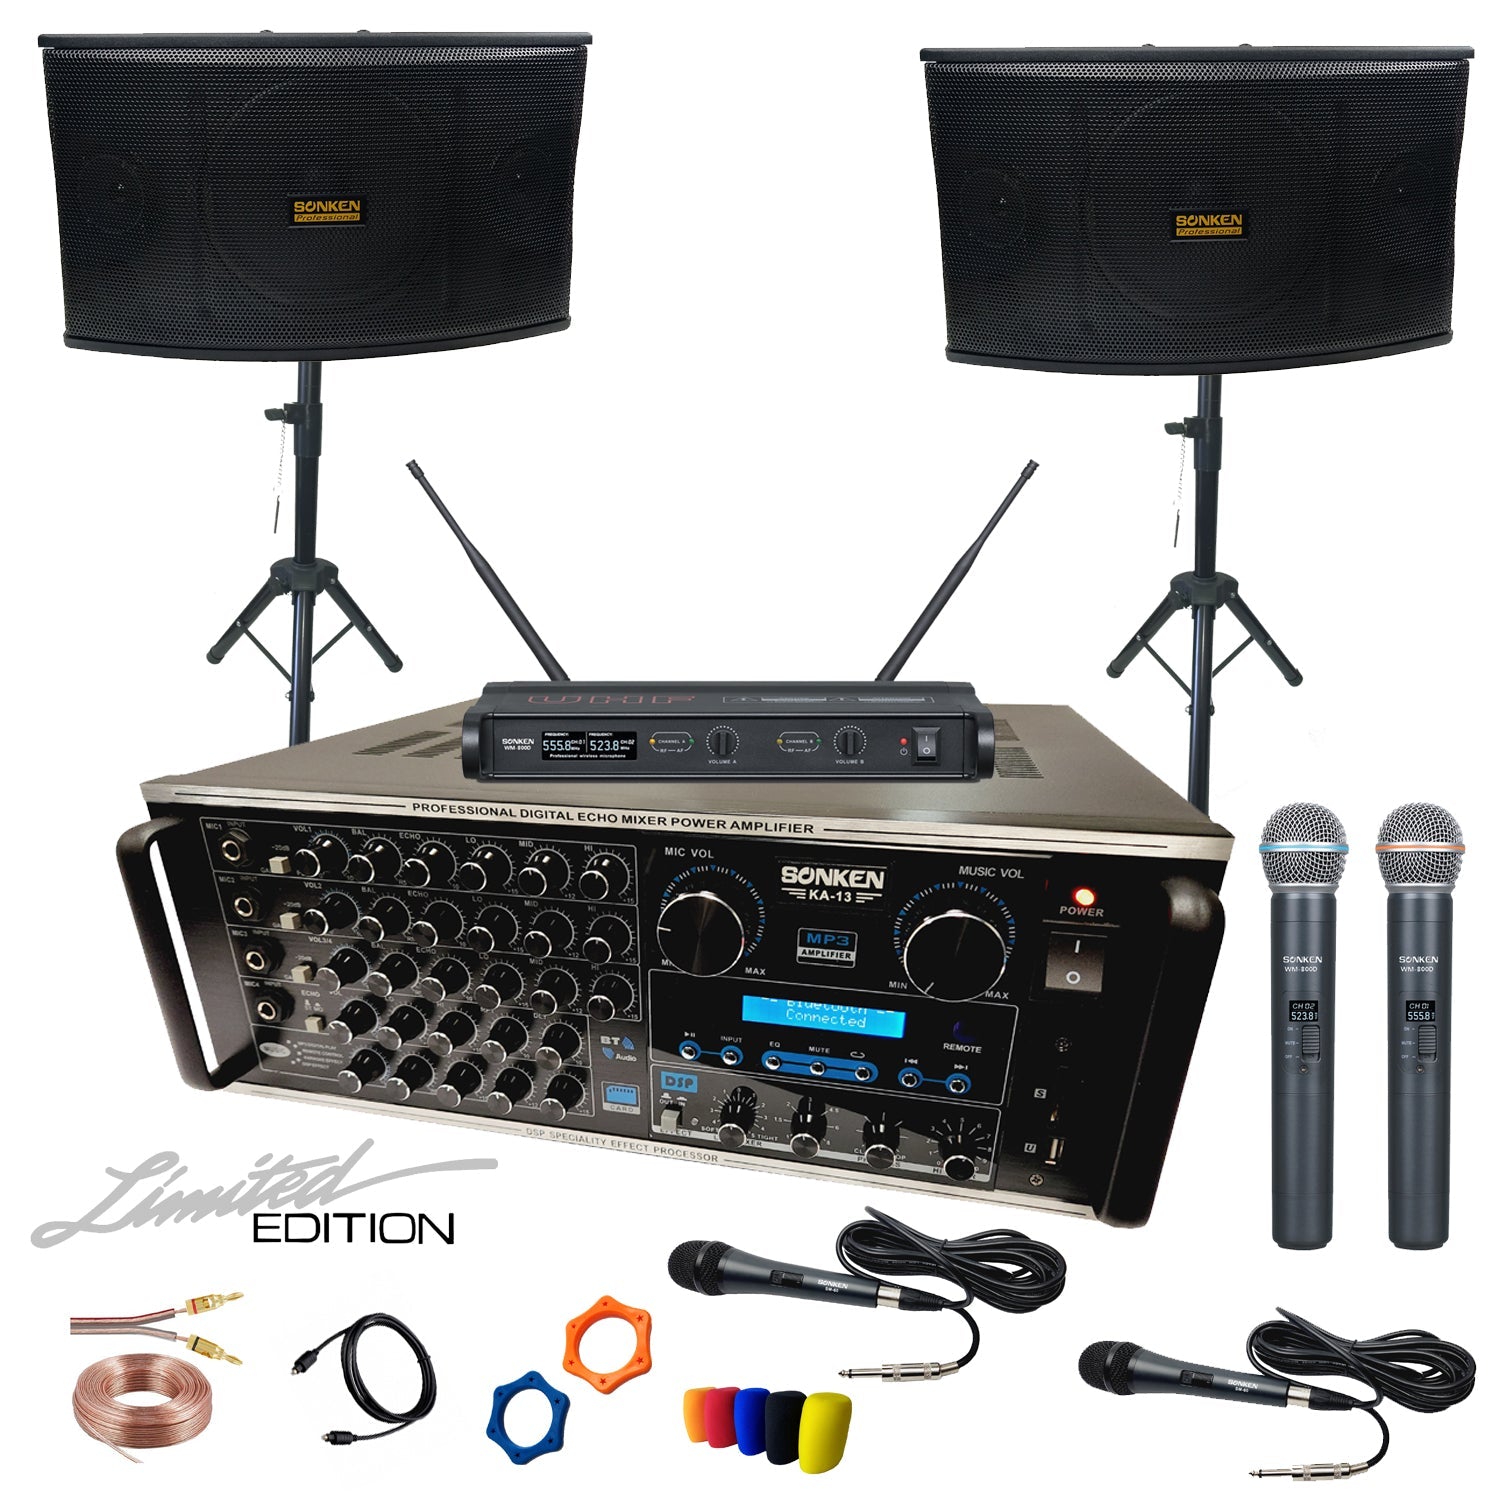 Sonken Home Karaoke Studio Package Deal (KA-13 Amp + CS-450 Speakers + WM-800D Wireless Mics) - Karaoke Home Entertainment